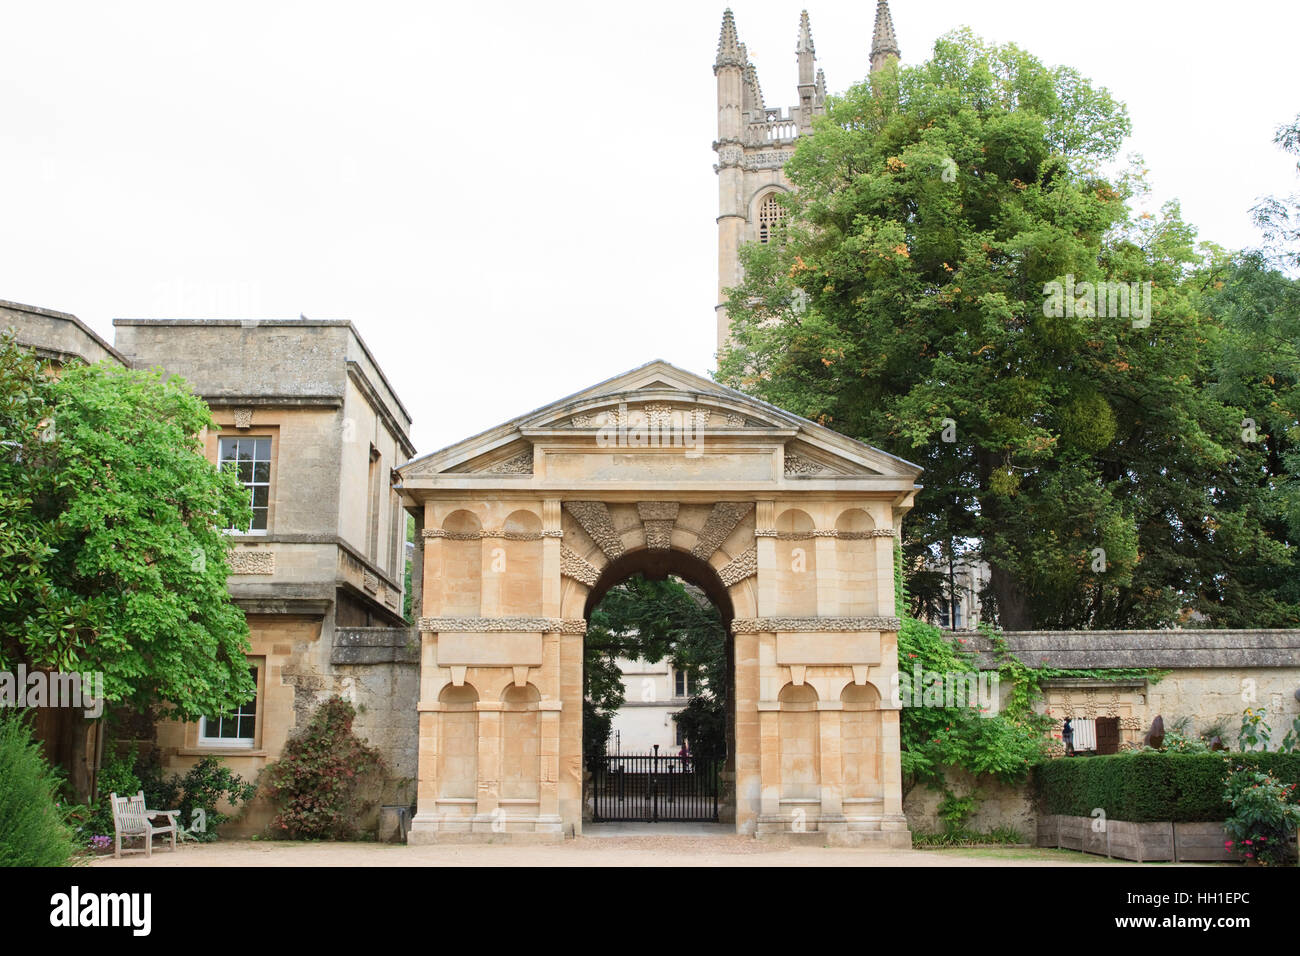 Il Danby Gateway (o arco) nella University of Oxford Botanic Garden, con Magdalen Tower in background. Foto Stock